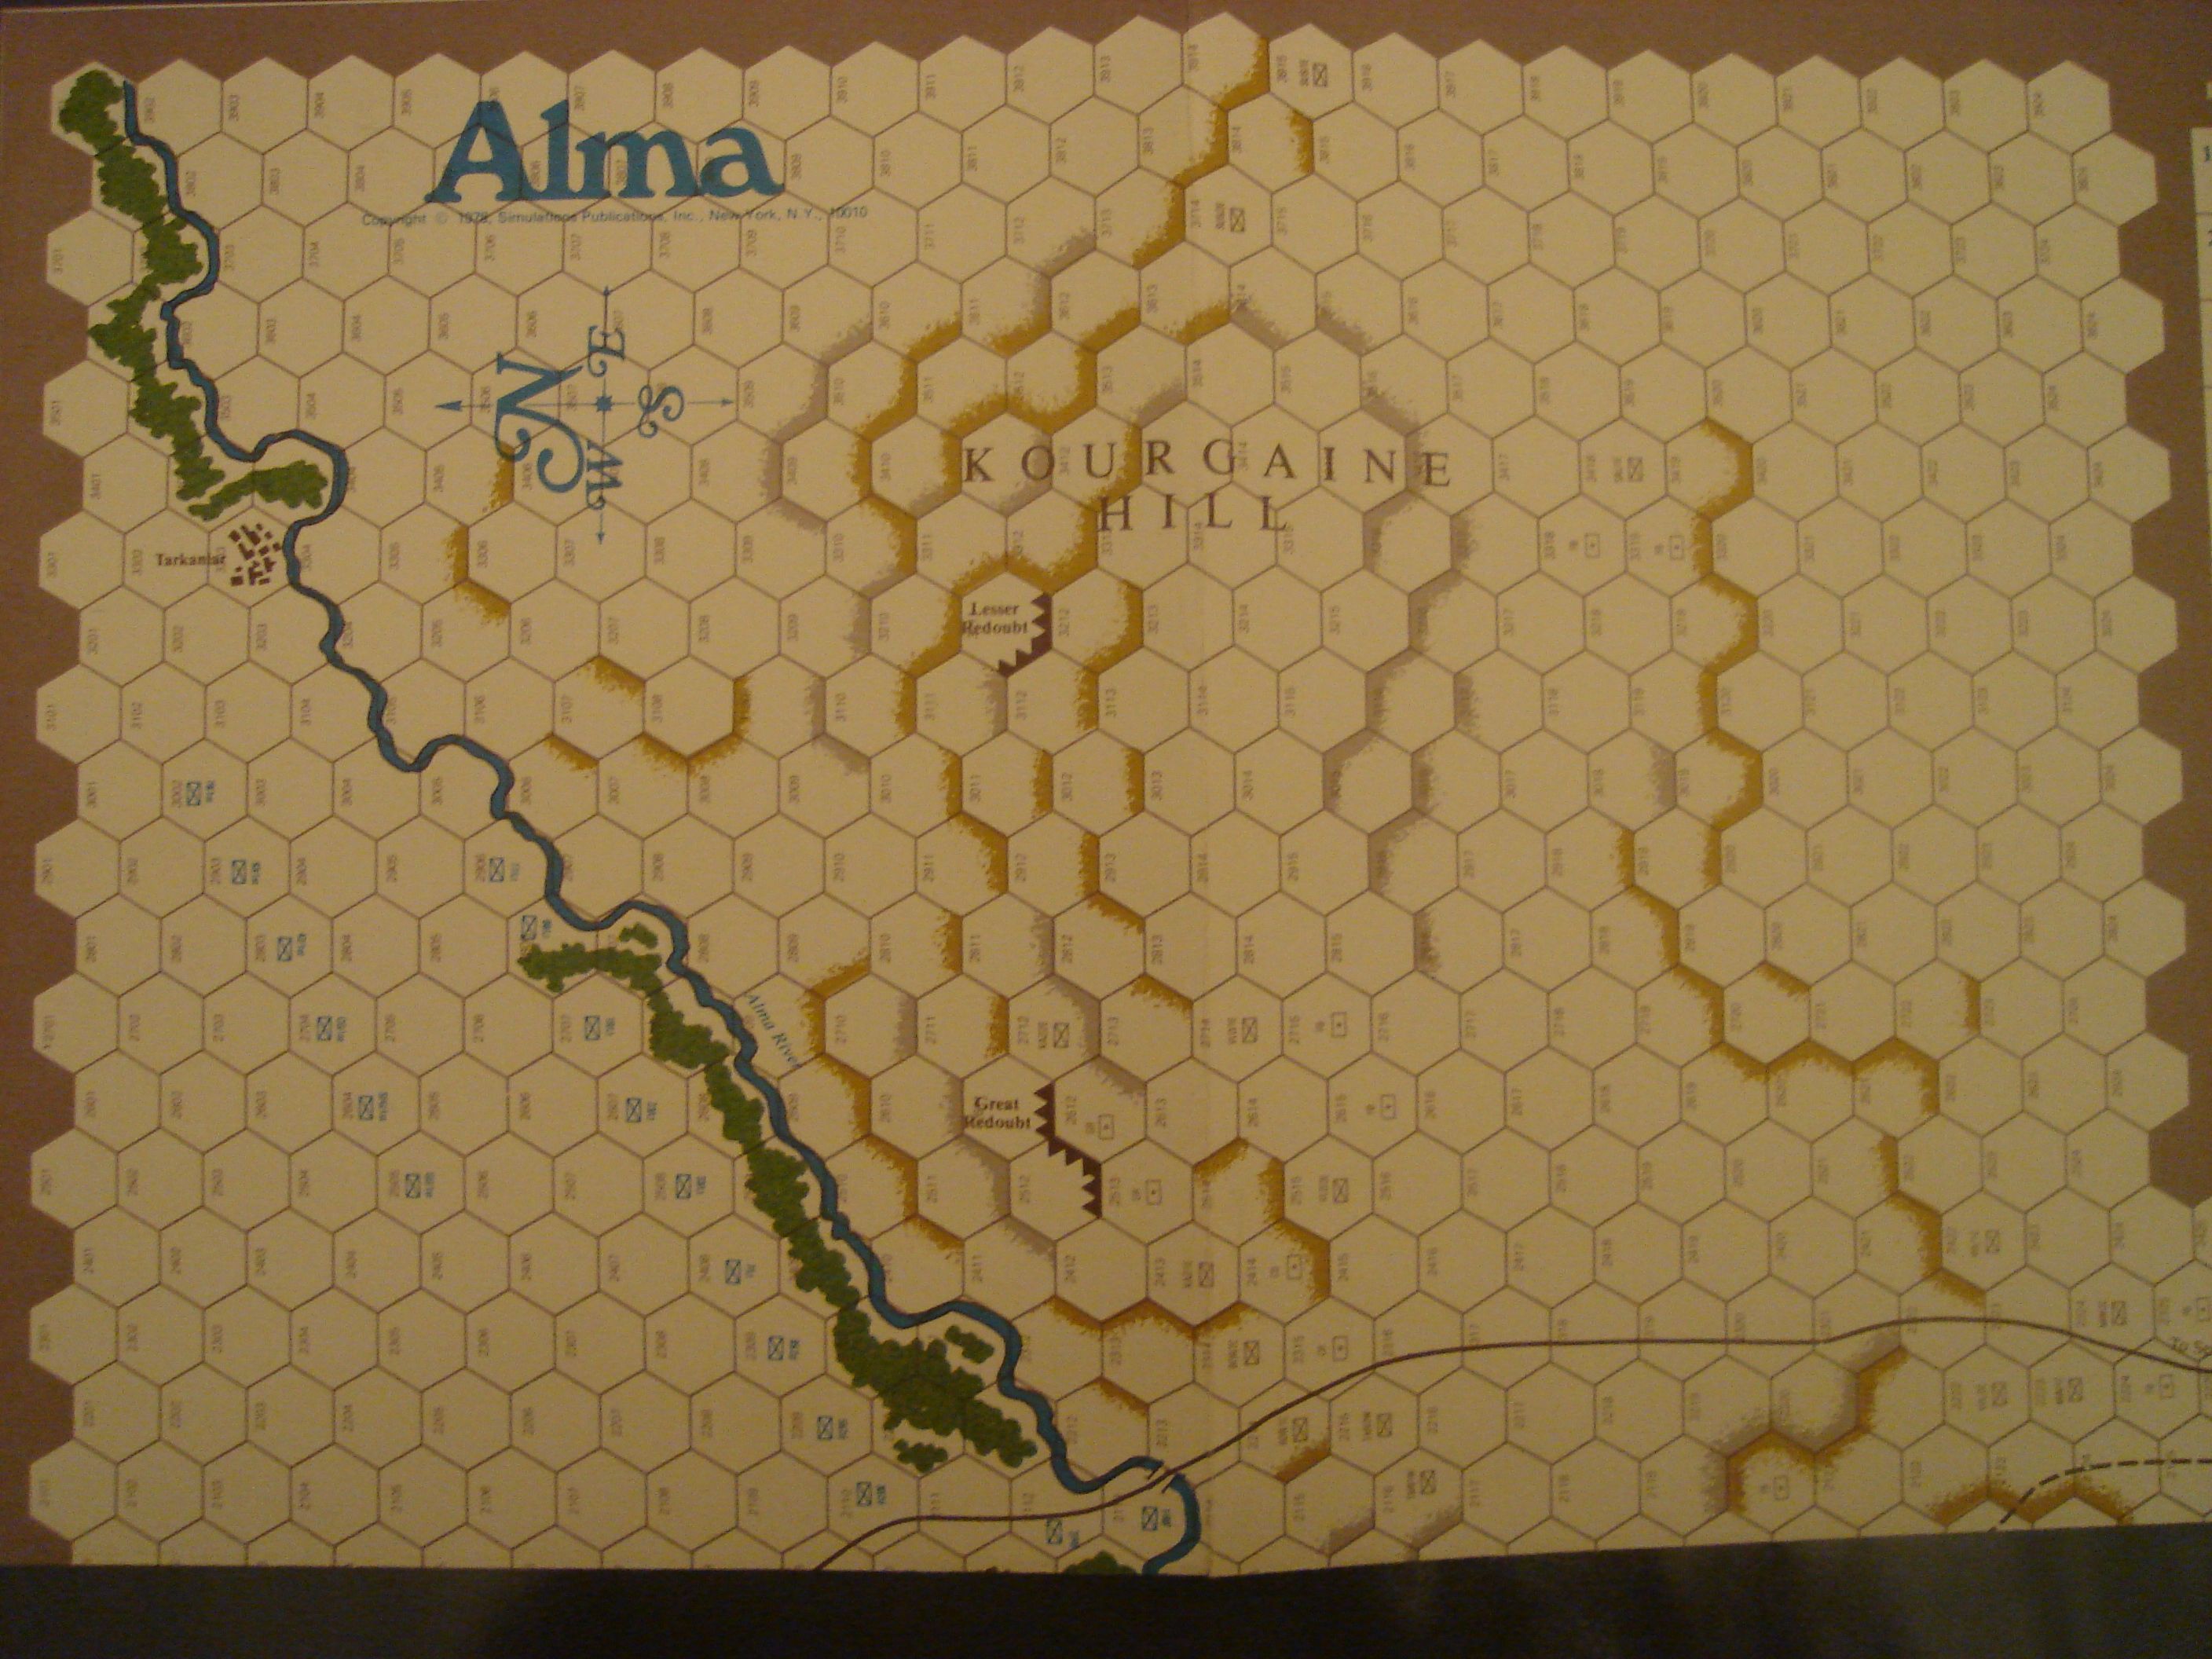 Alma: The First Battle, 20 September 1854